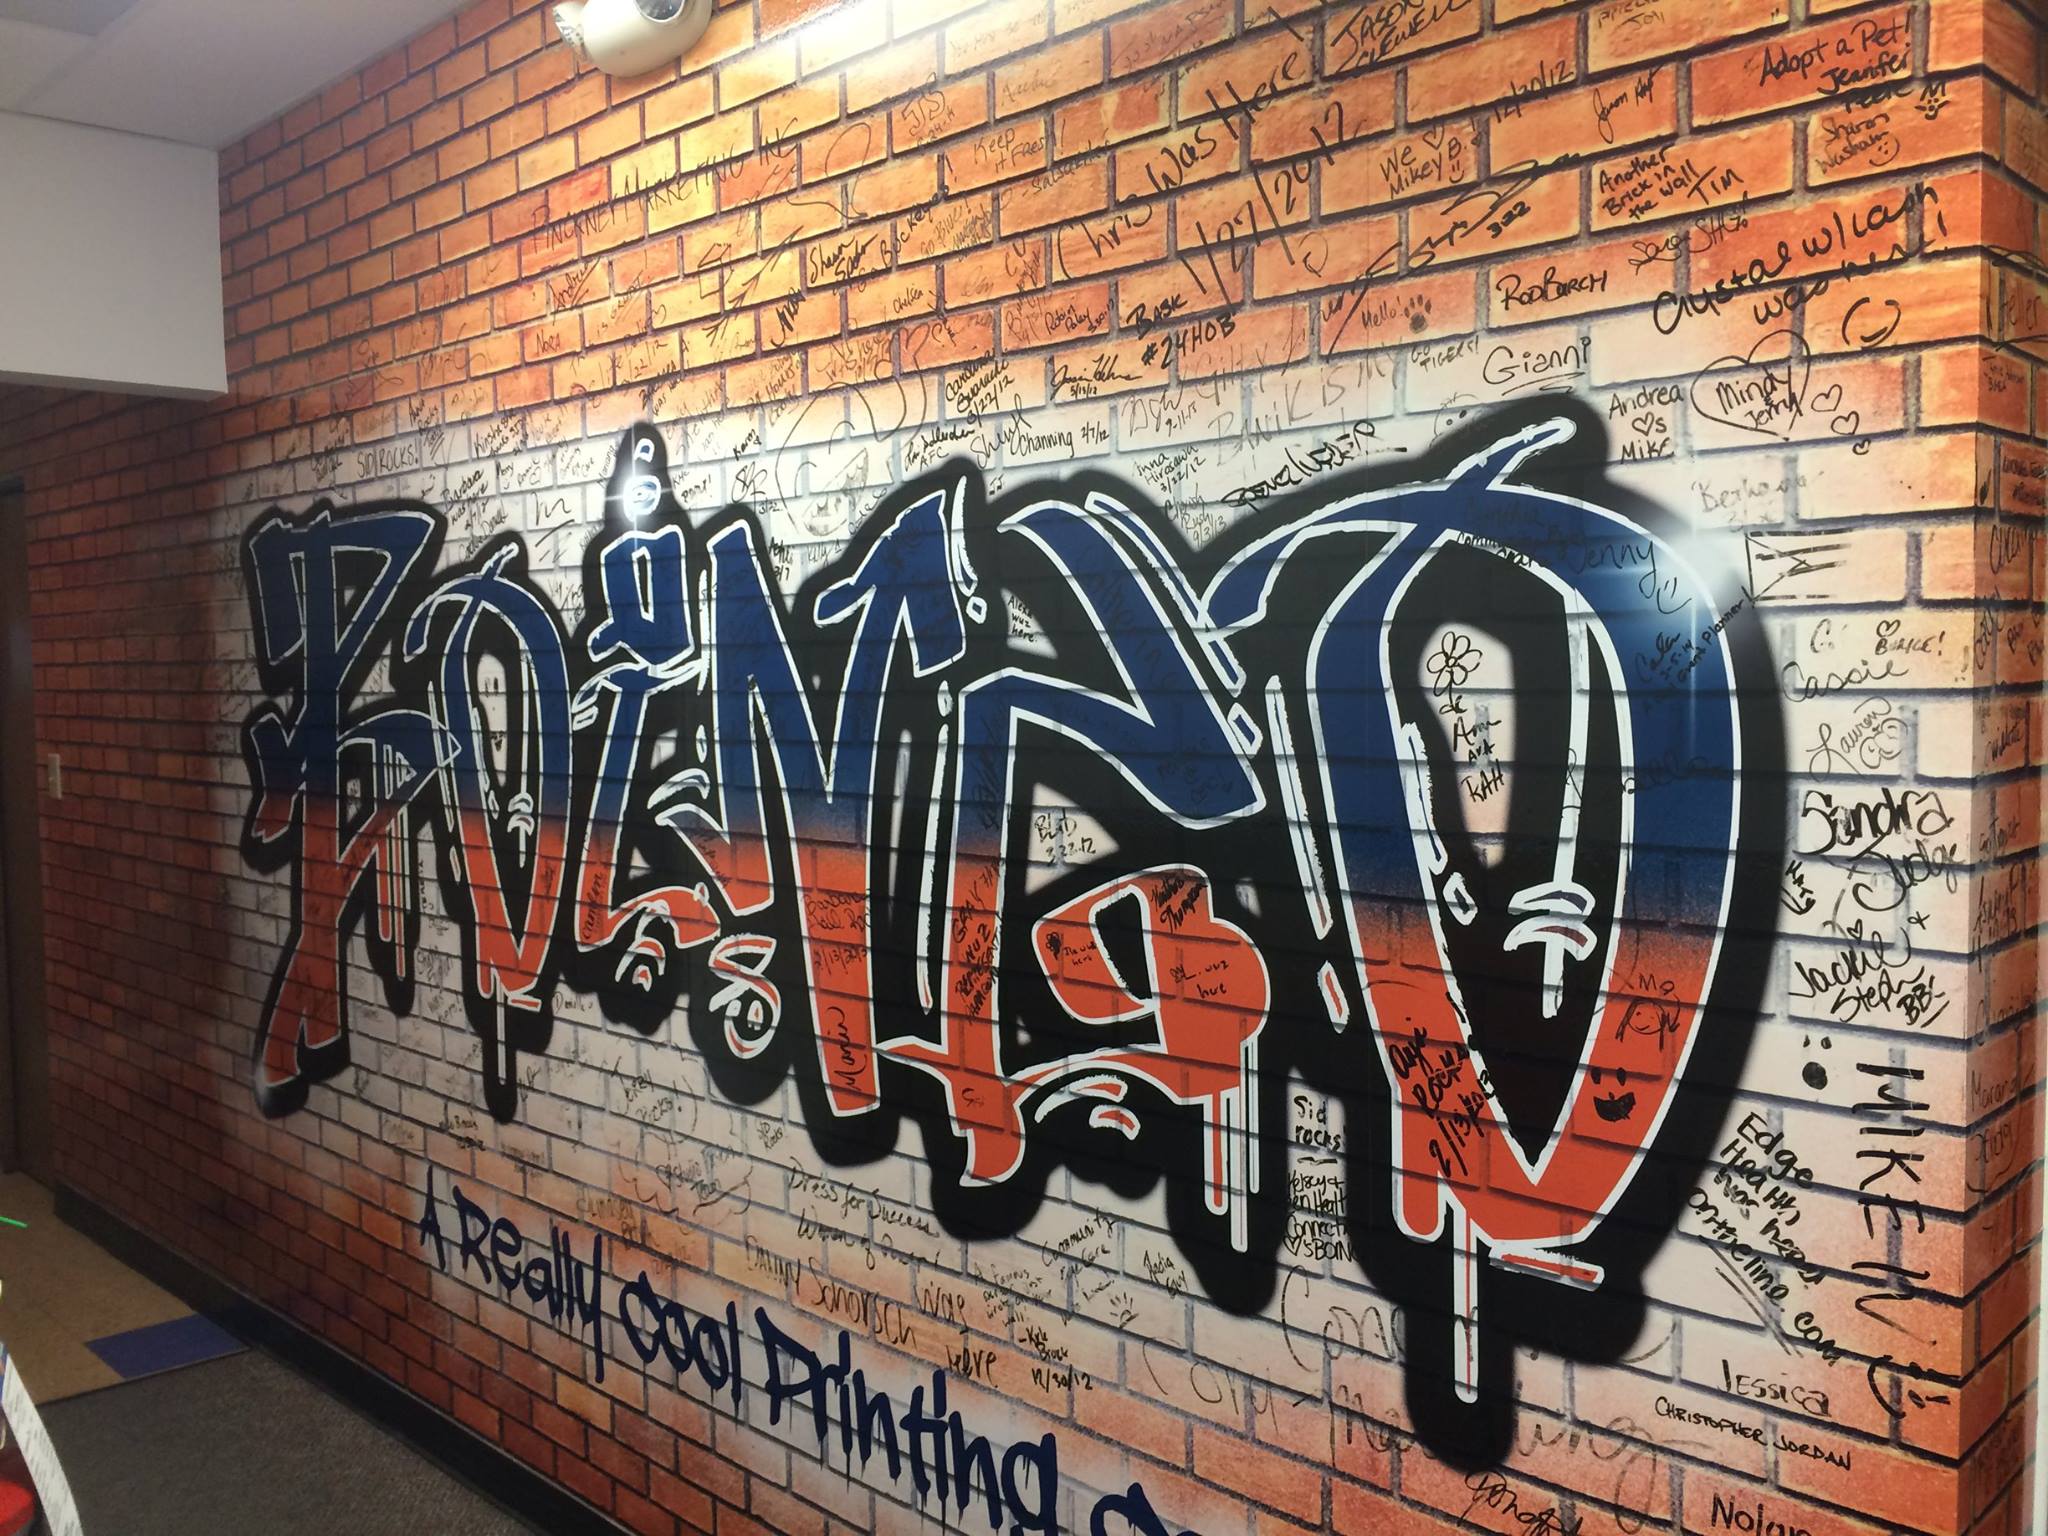 Boingo Graffiti Wall Graphic in Orange and Black on Brick Wall.